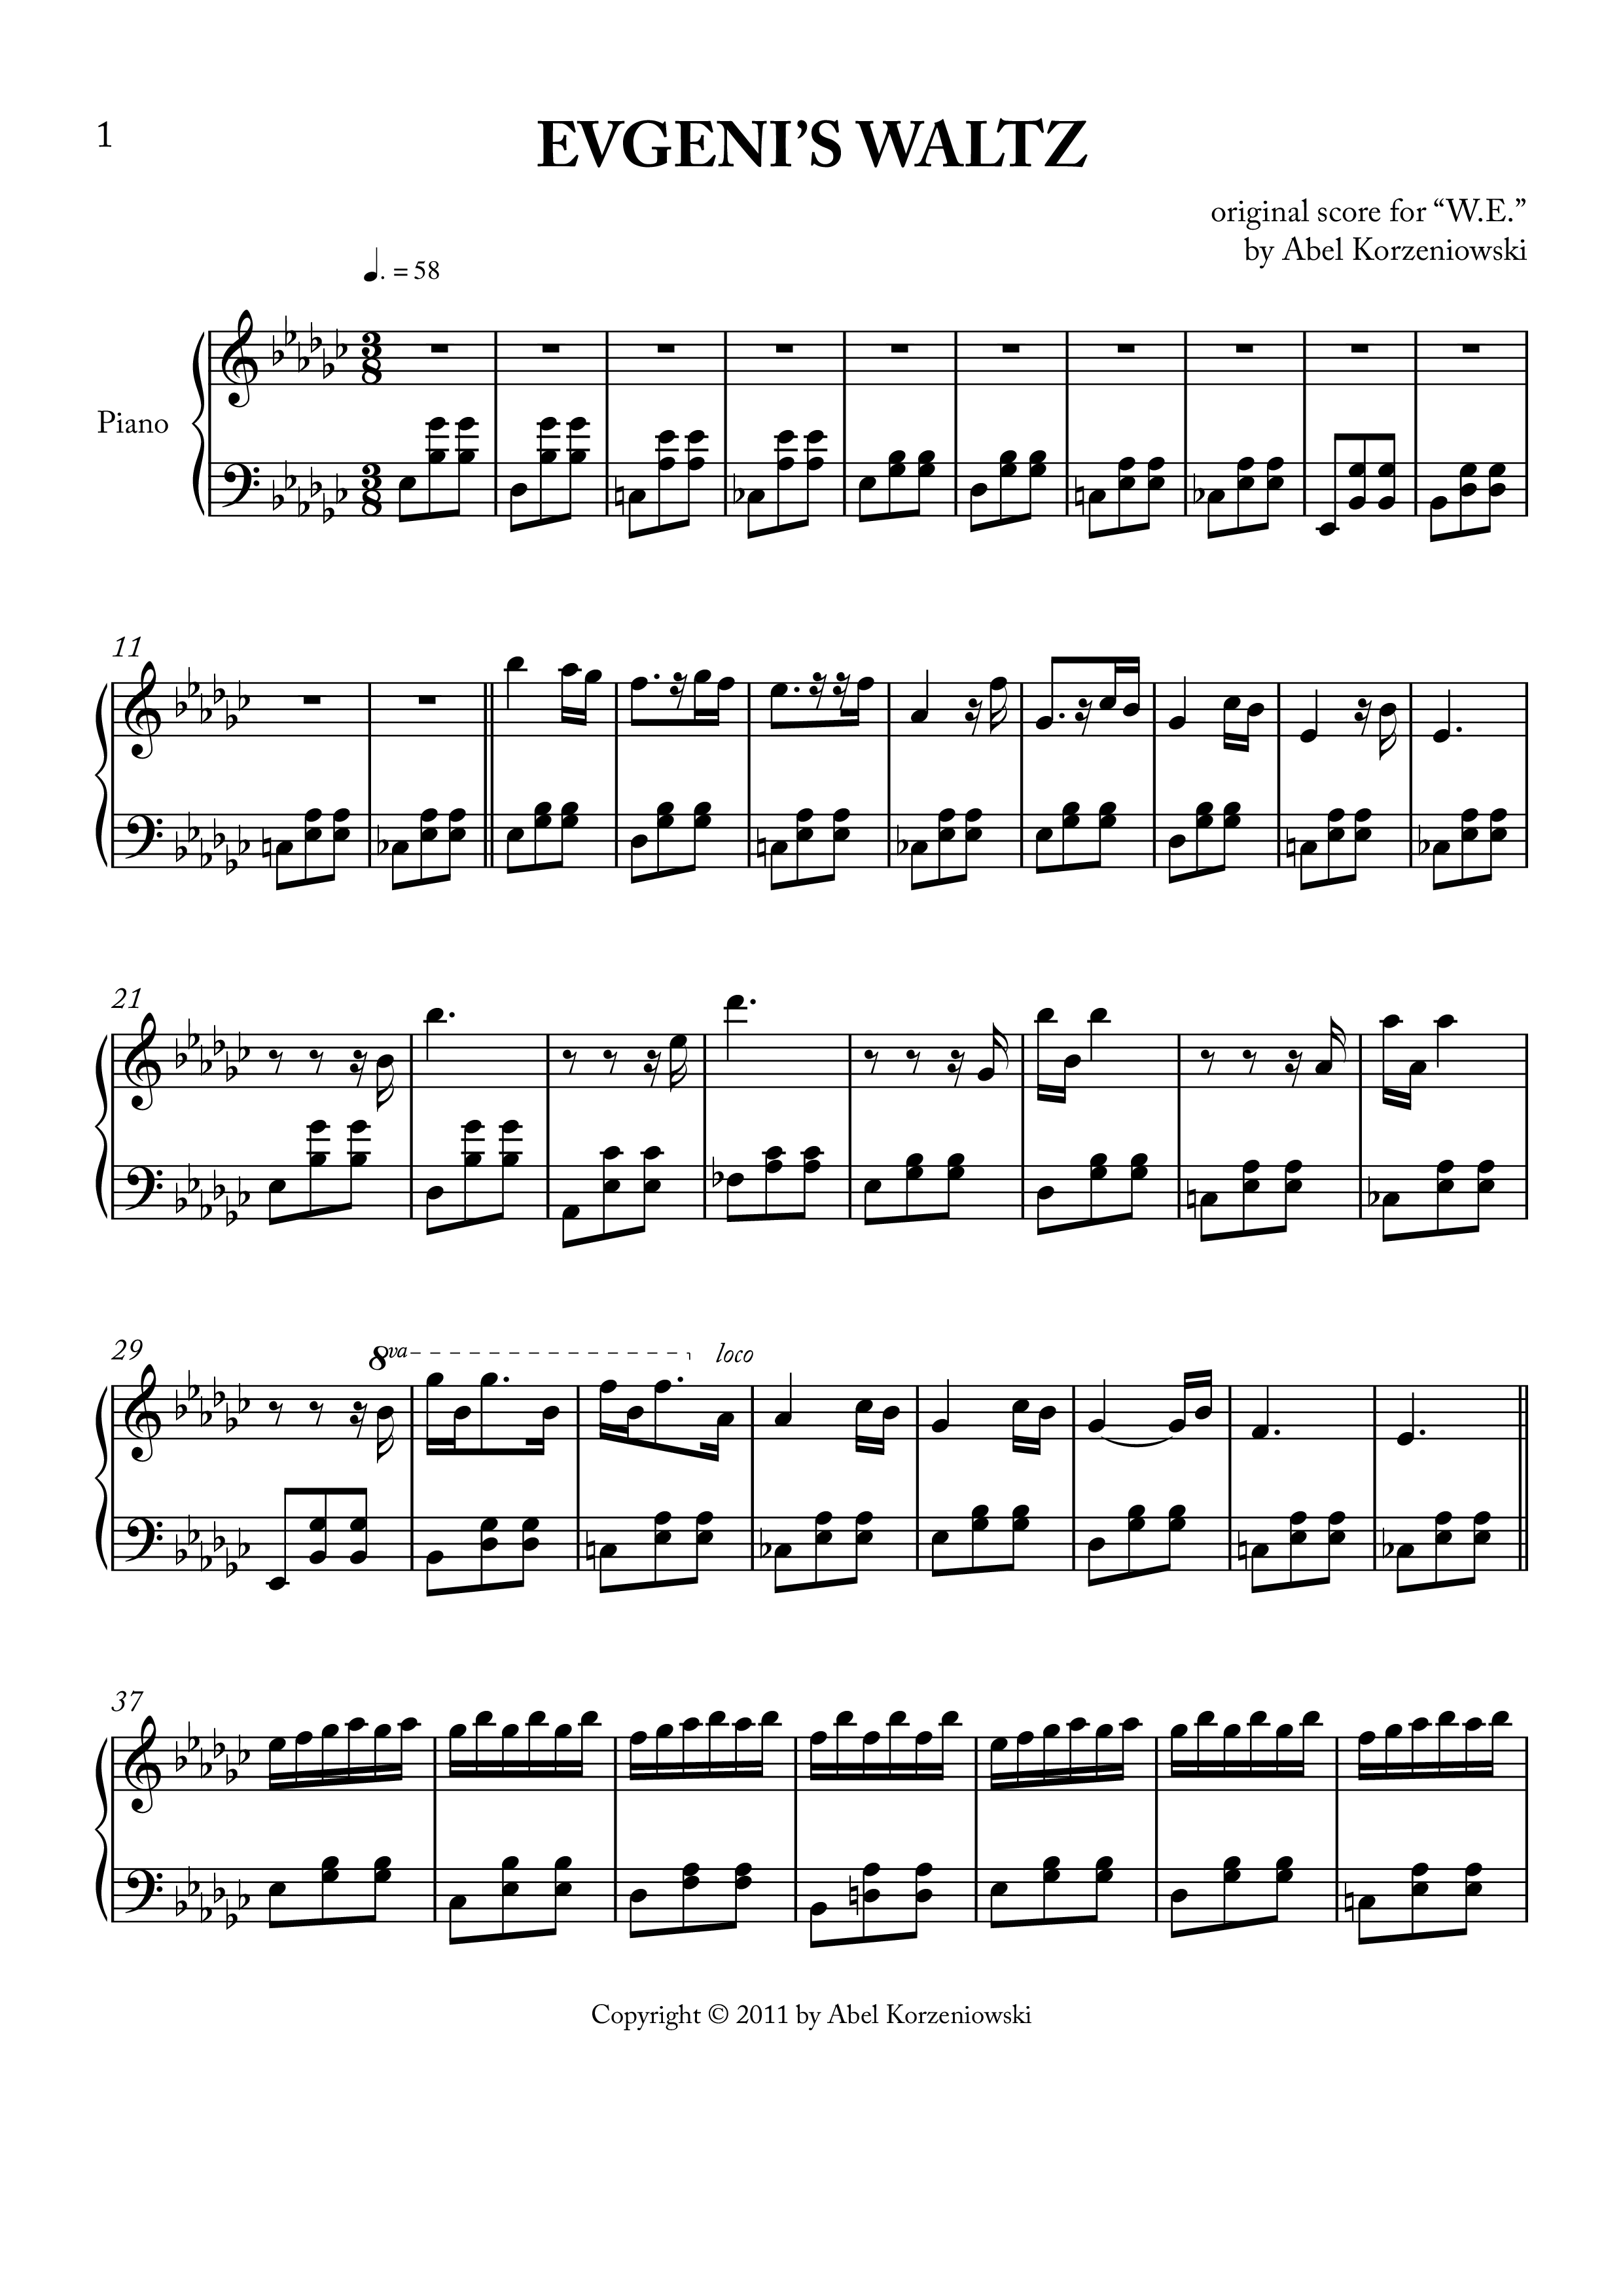 Evgeni's Waltz Score